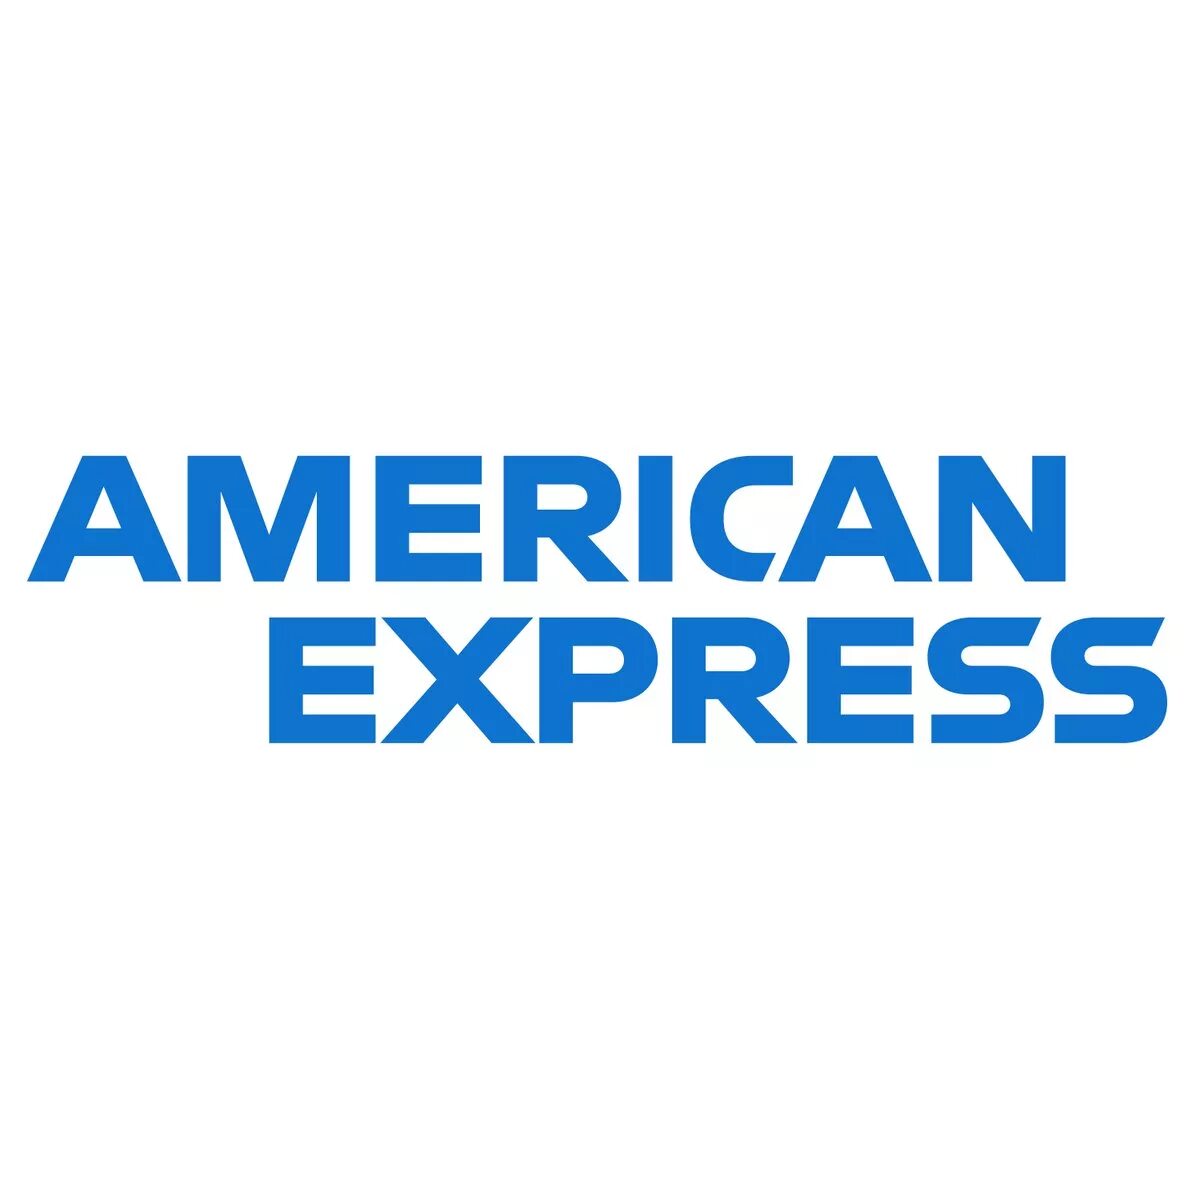 T me brand american express. Логотип Amex. American Express. Логотип Американ банк. Эмблема American Express.